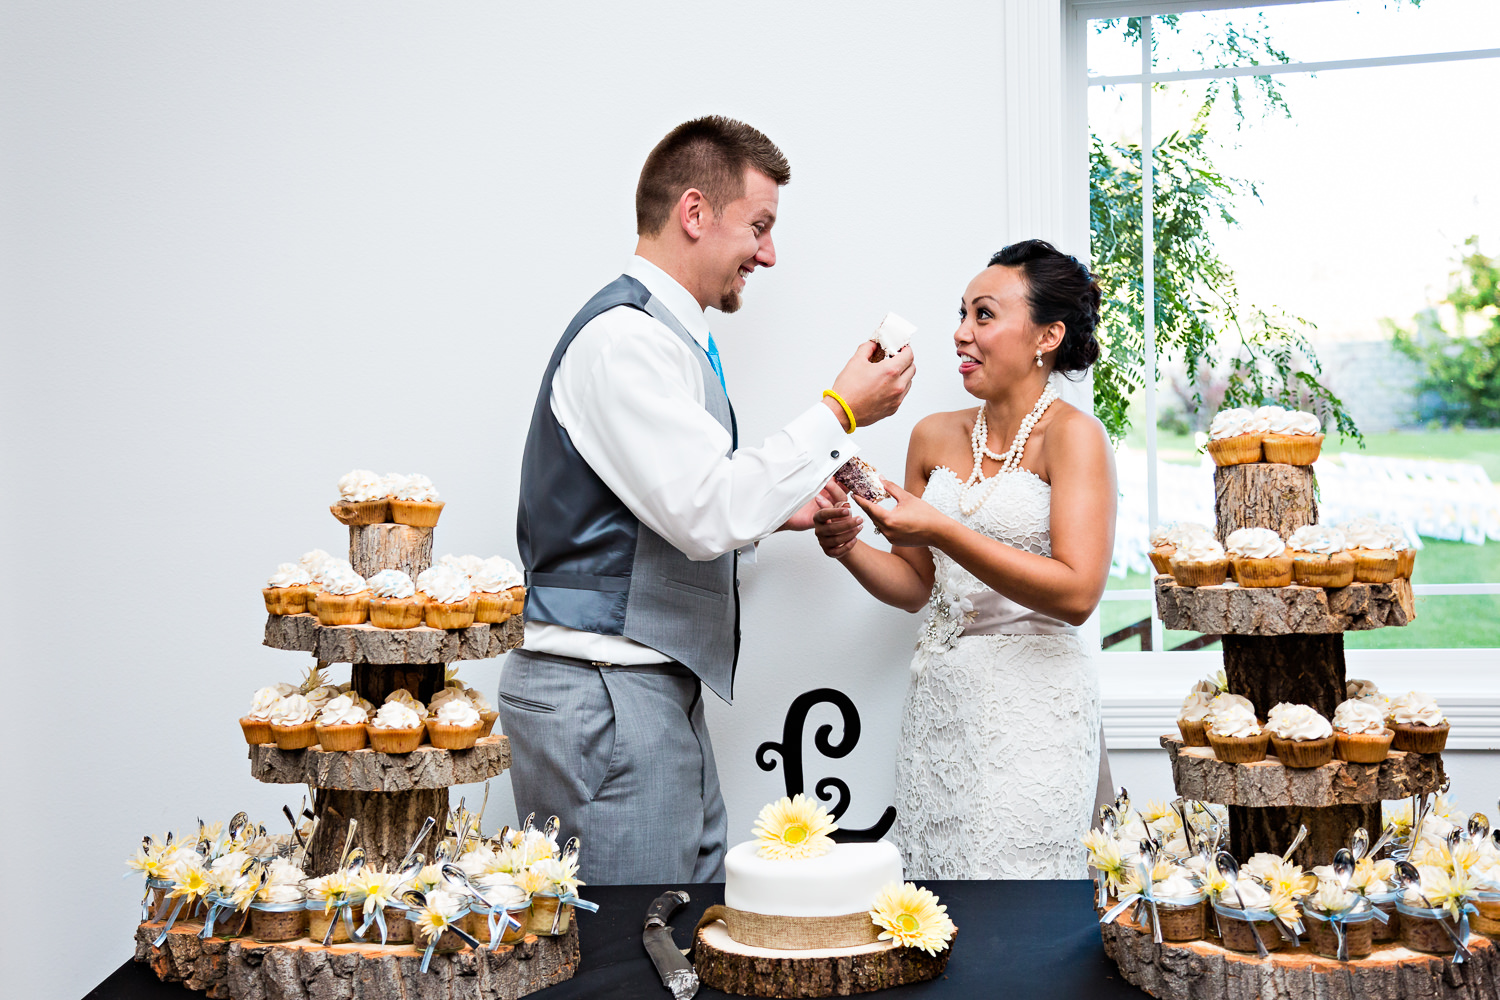 billings-montana-chanceys-wedding-reception-cake-cutting.jpg